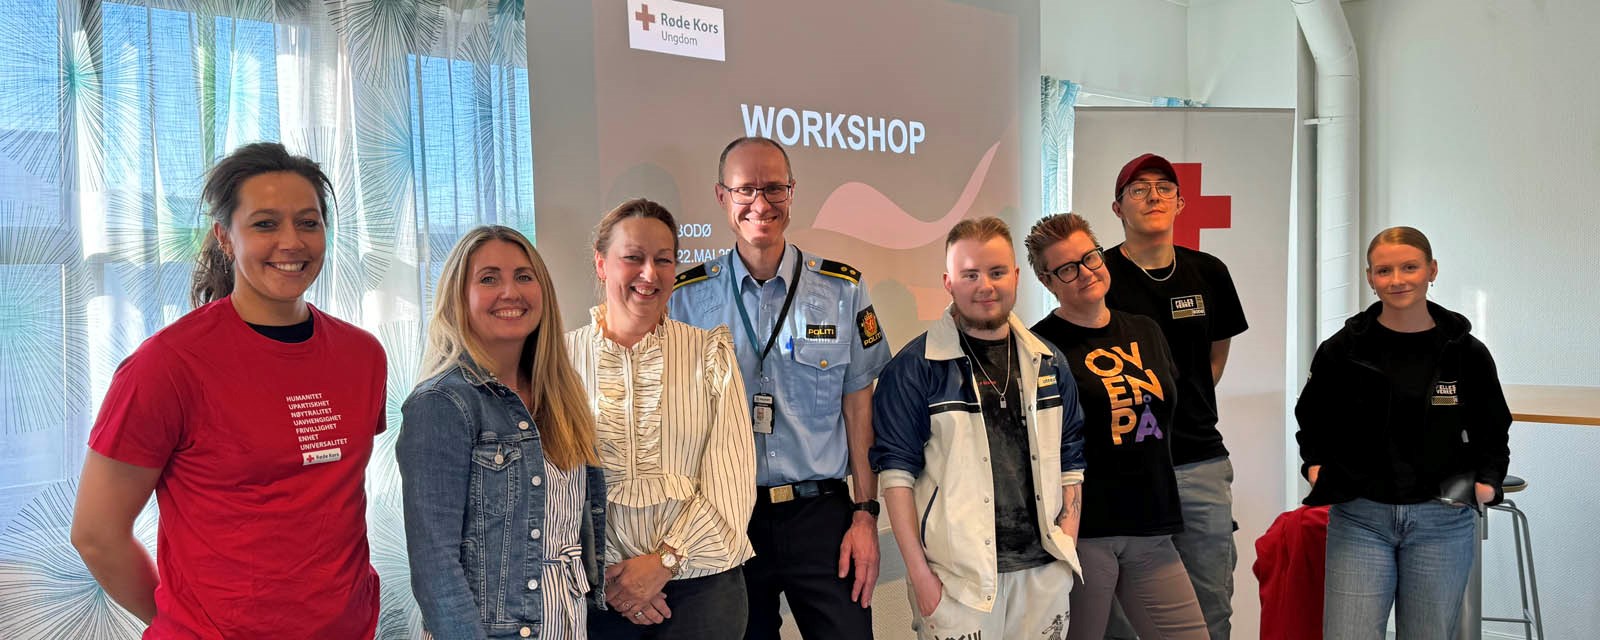 Bodø Røde Kors Ungdom har arrangert første workshop om situasjonen til barn og unge i Bodø